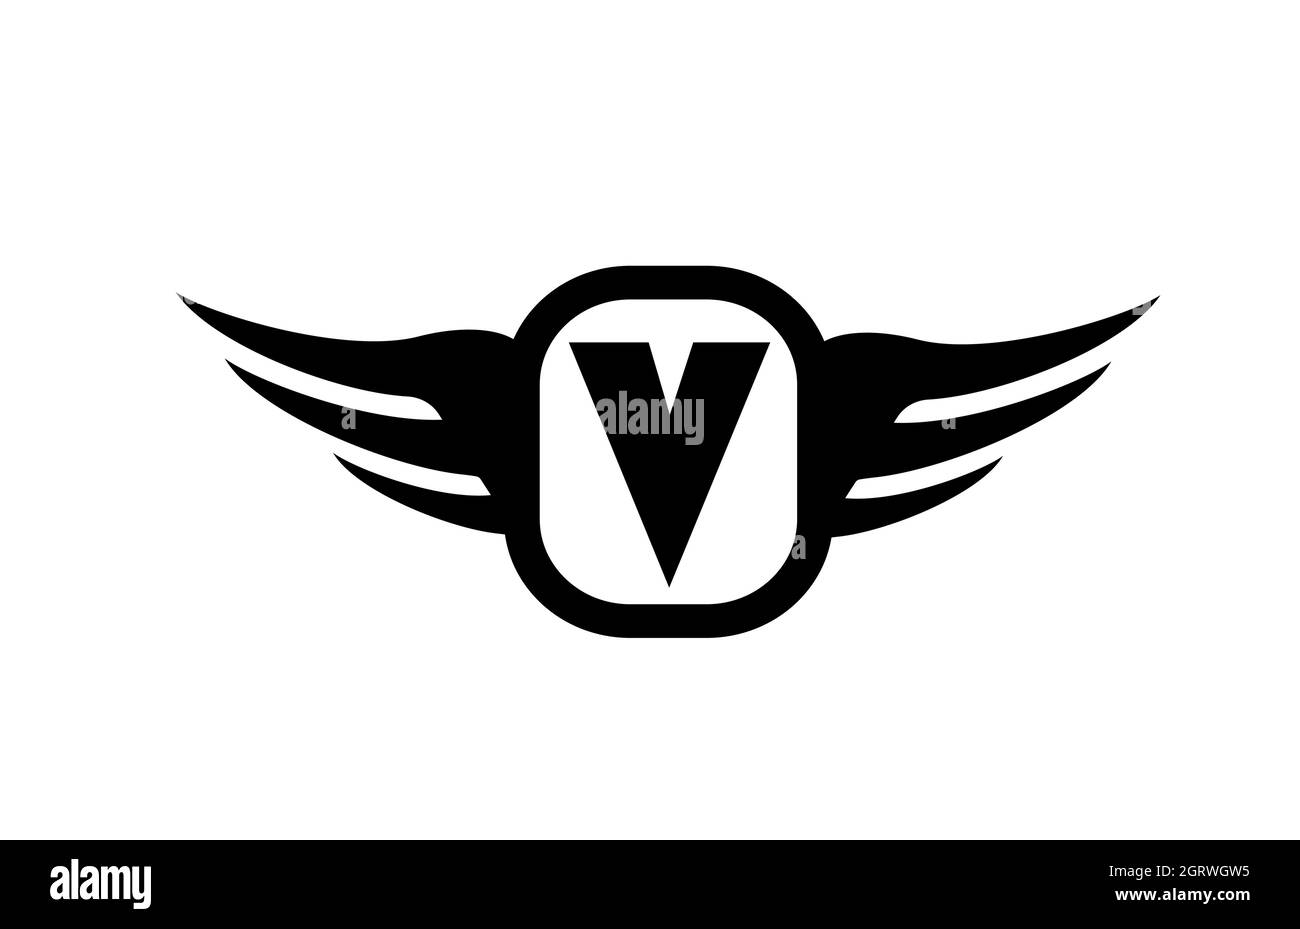 White blue alphabet letter v logo company icon Vector Image